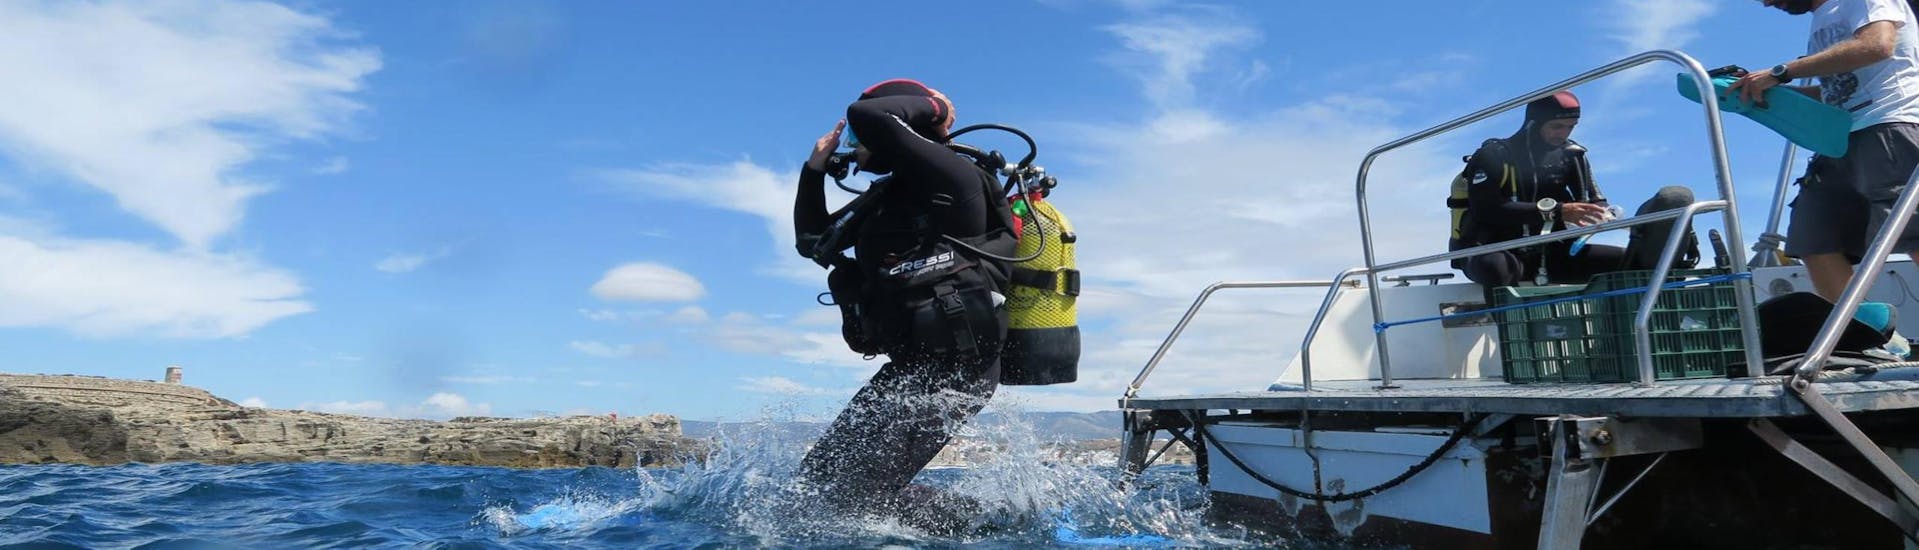 scuba-diving-course-for-beginners-deluxe-open-water-diver-leon-marina-tarifa-hero